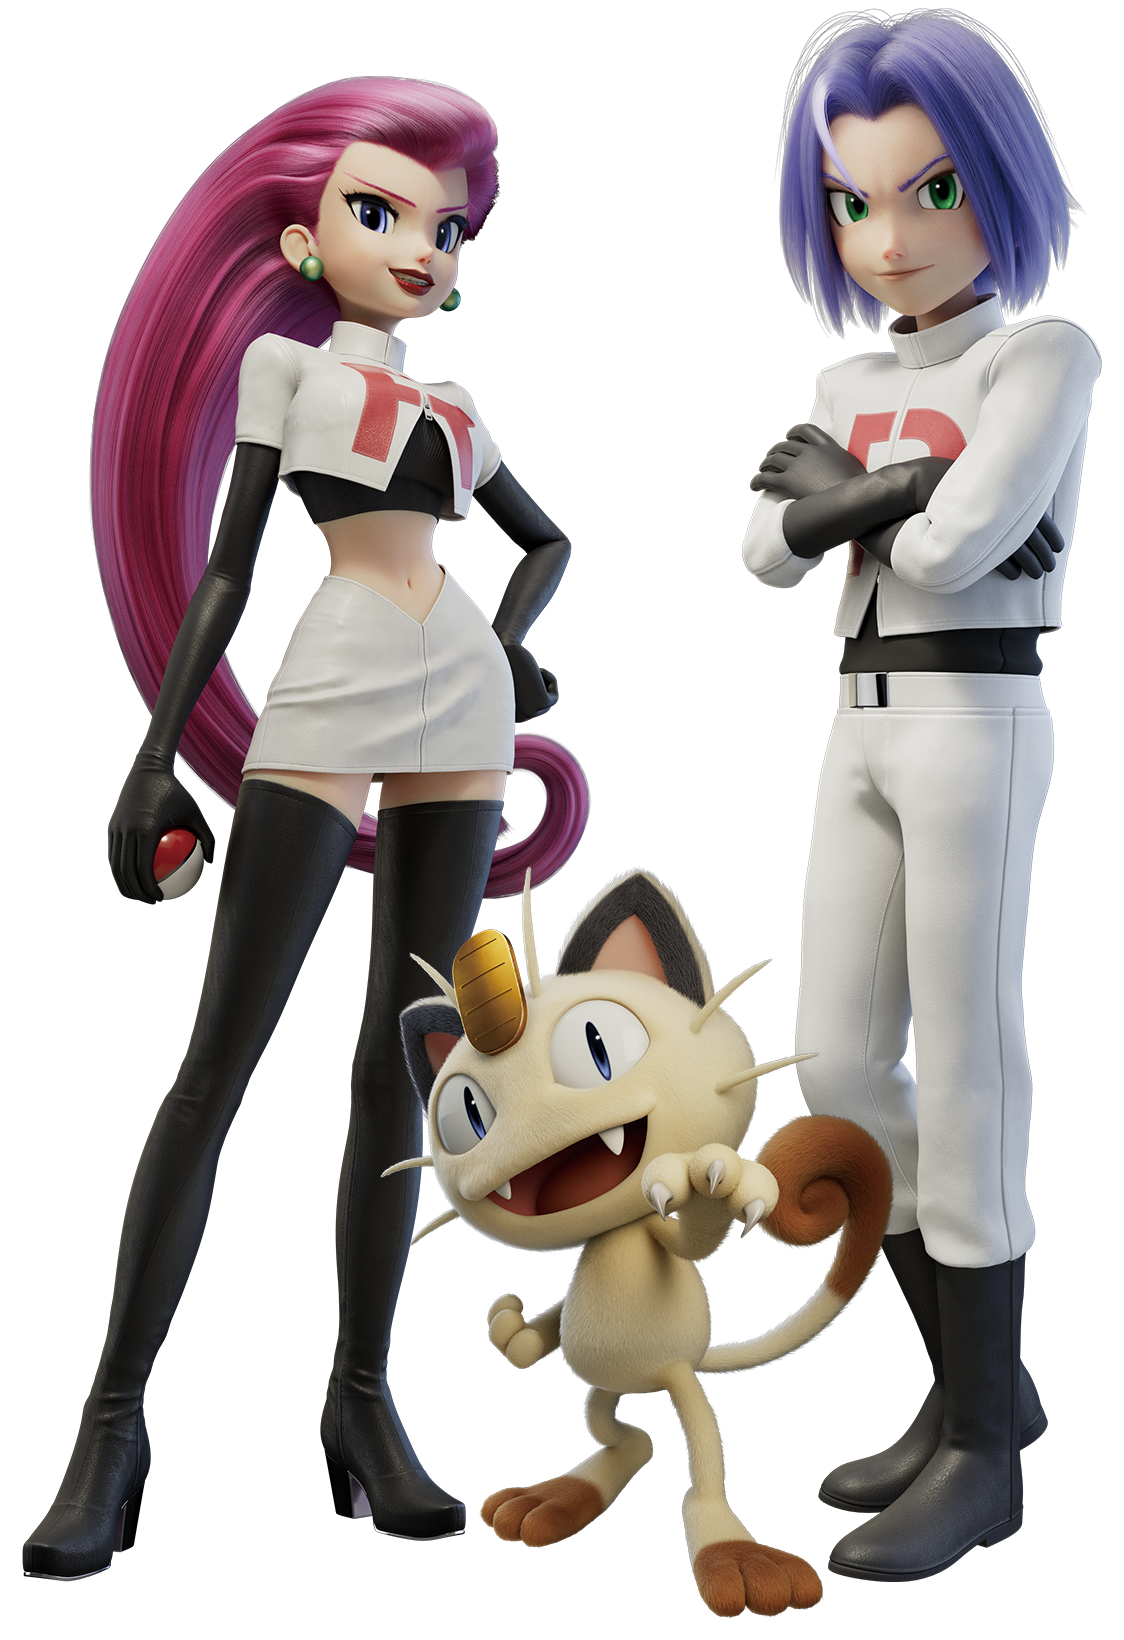 The 2 Sides of Team Rocket - which do you prefer? | Pokémon Amino